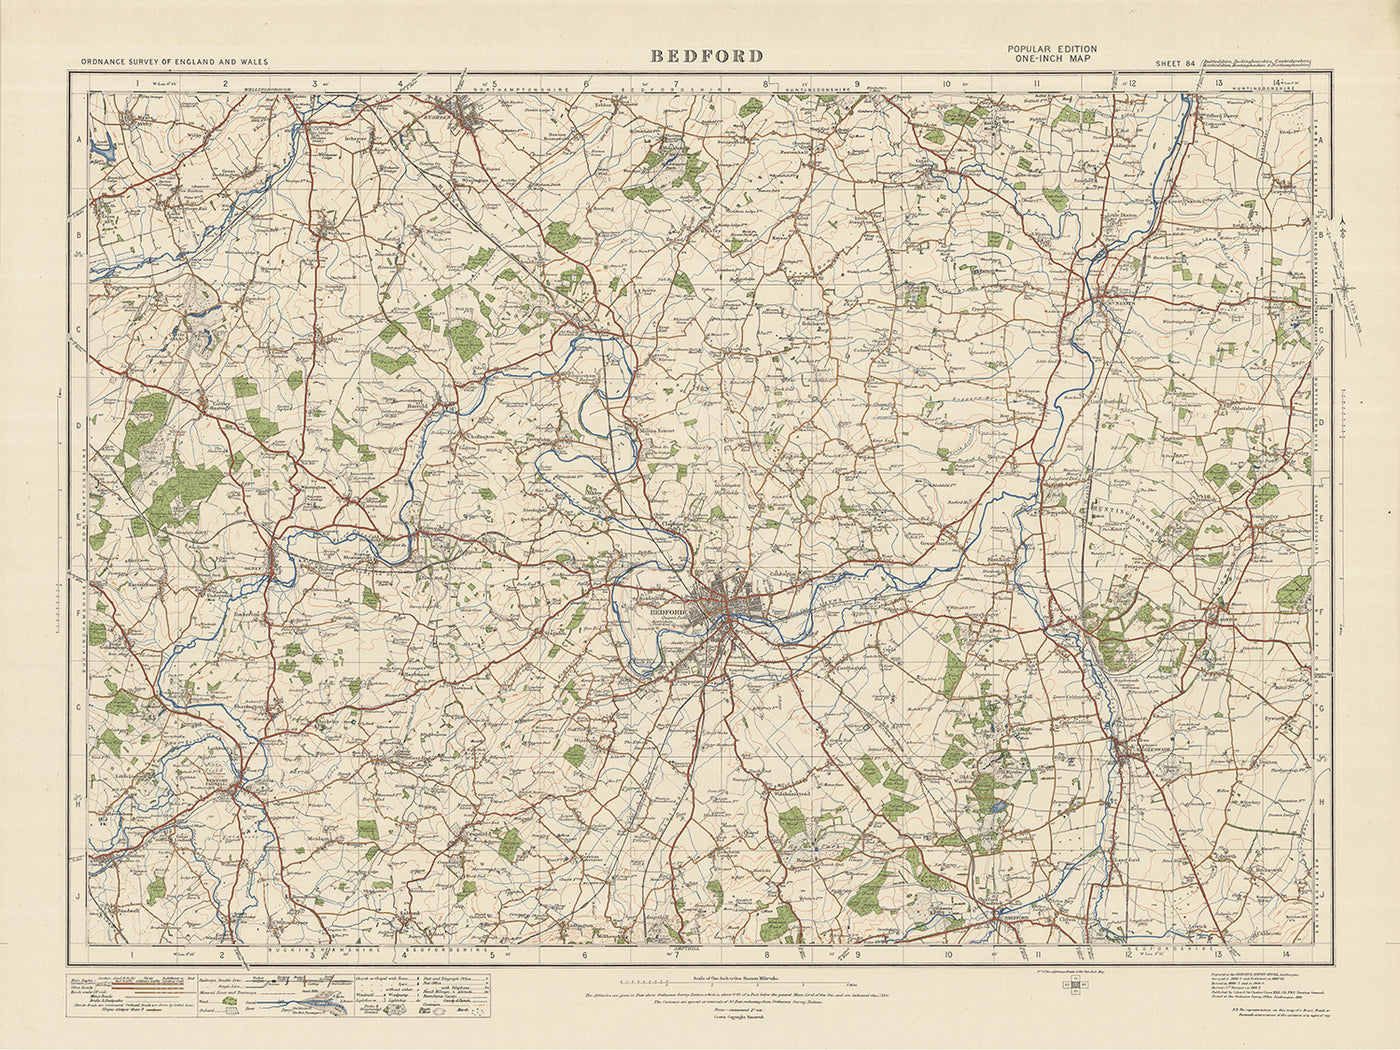 Old Ordnance Survey Map, Sheet 84 - Bedford, 1925: St Neots, Biggleswade, Sandy, Newport Pagnell, Rushden